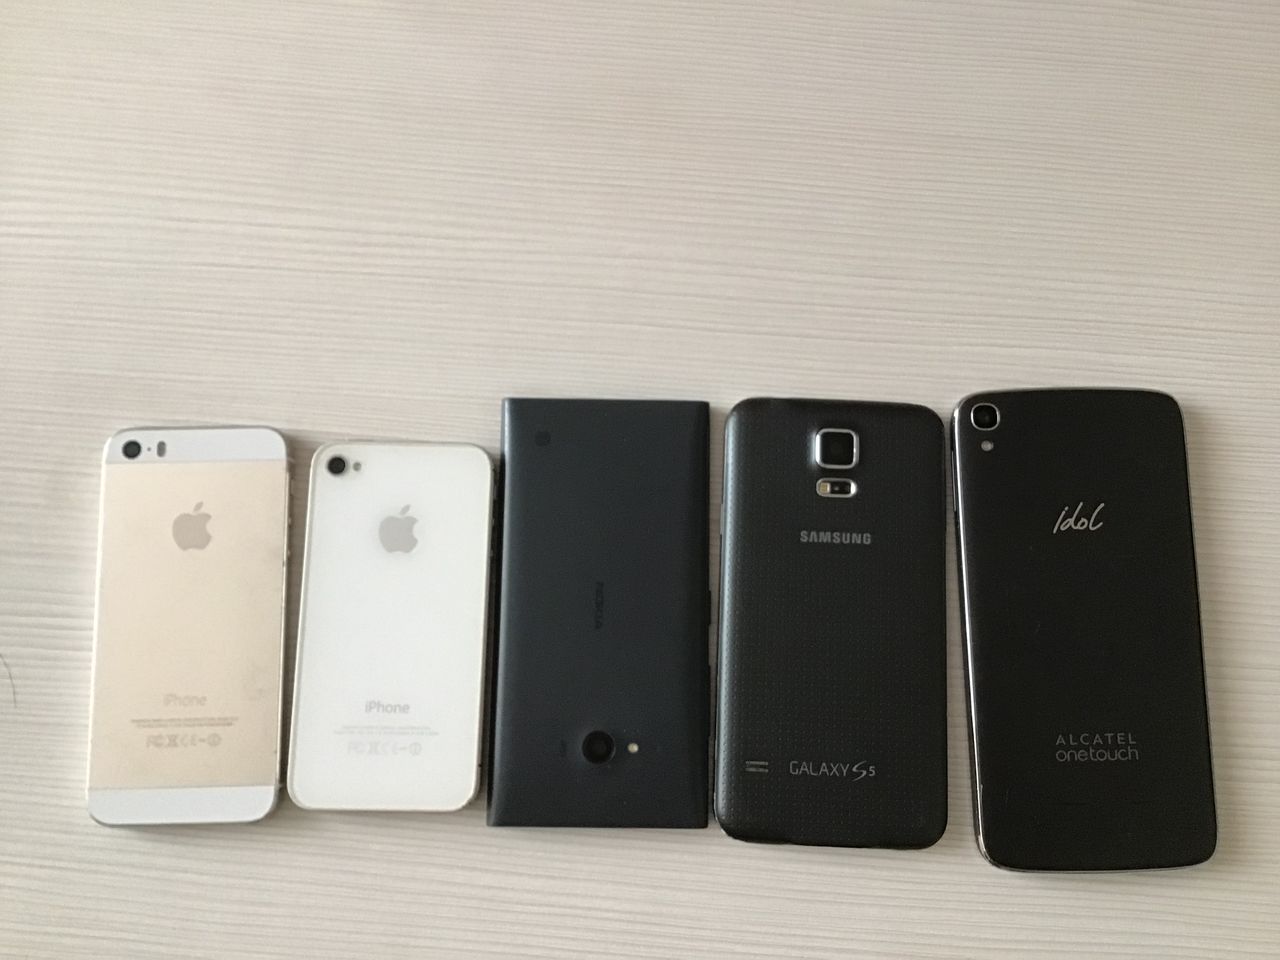 Samsung galaxy S5 подделка или нет